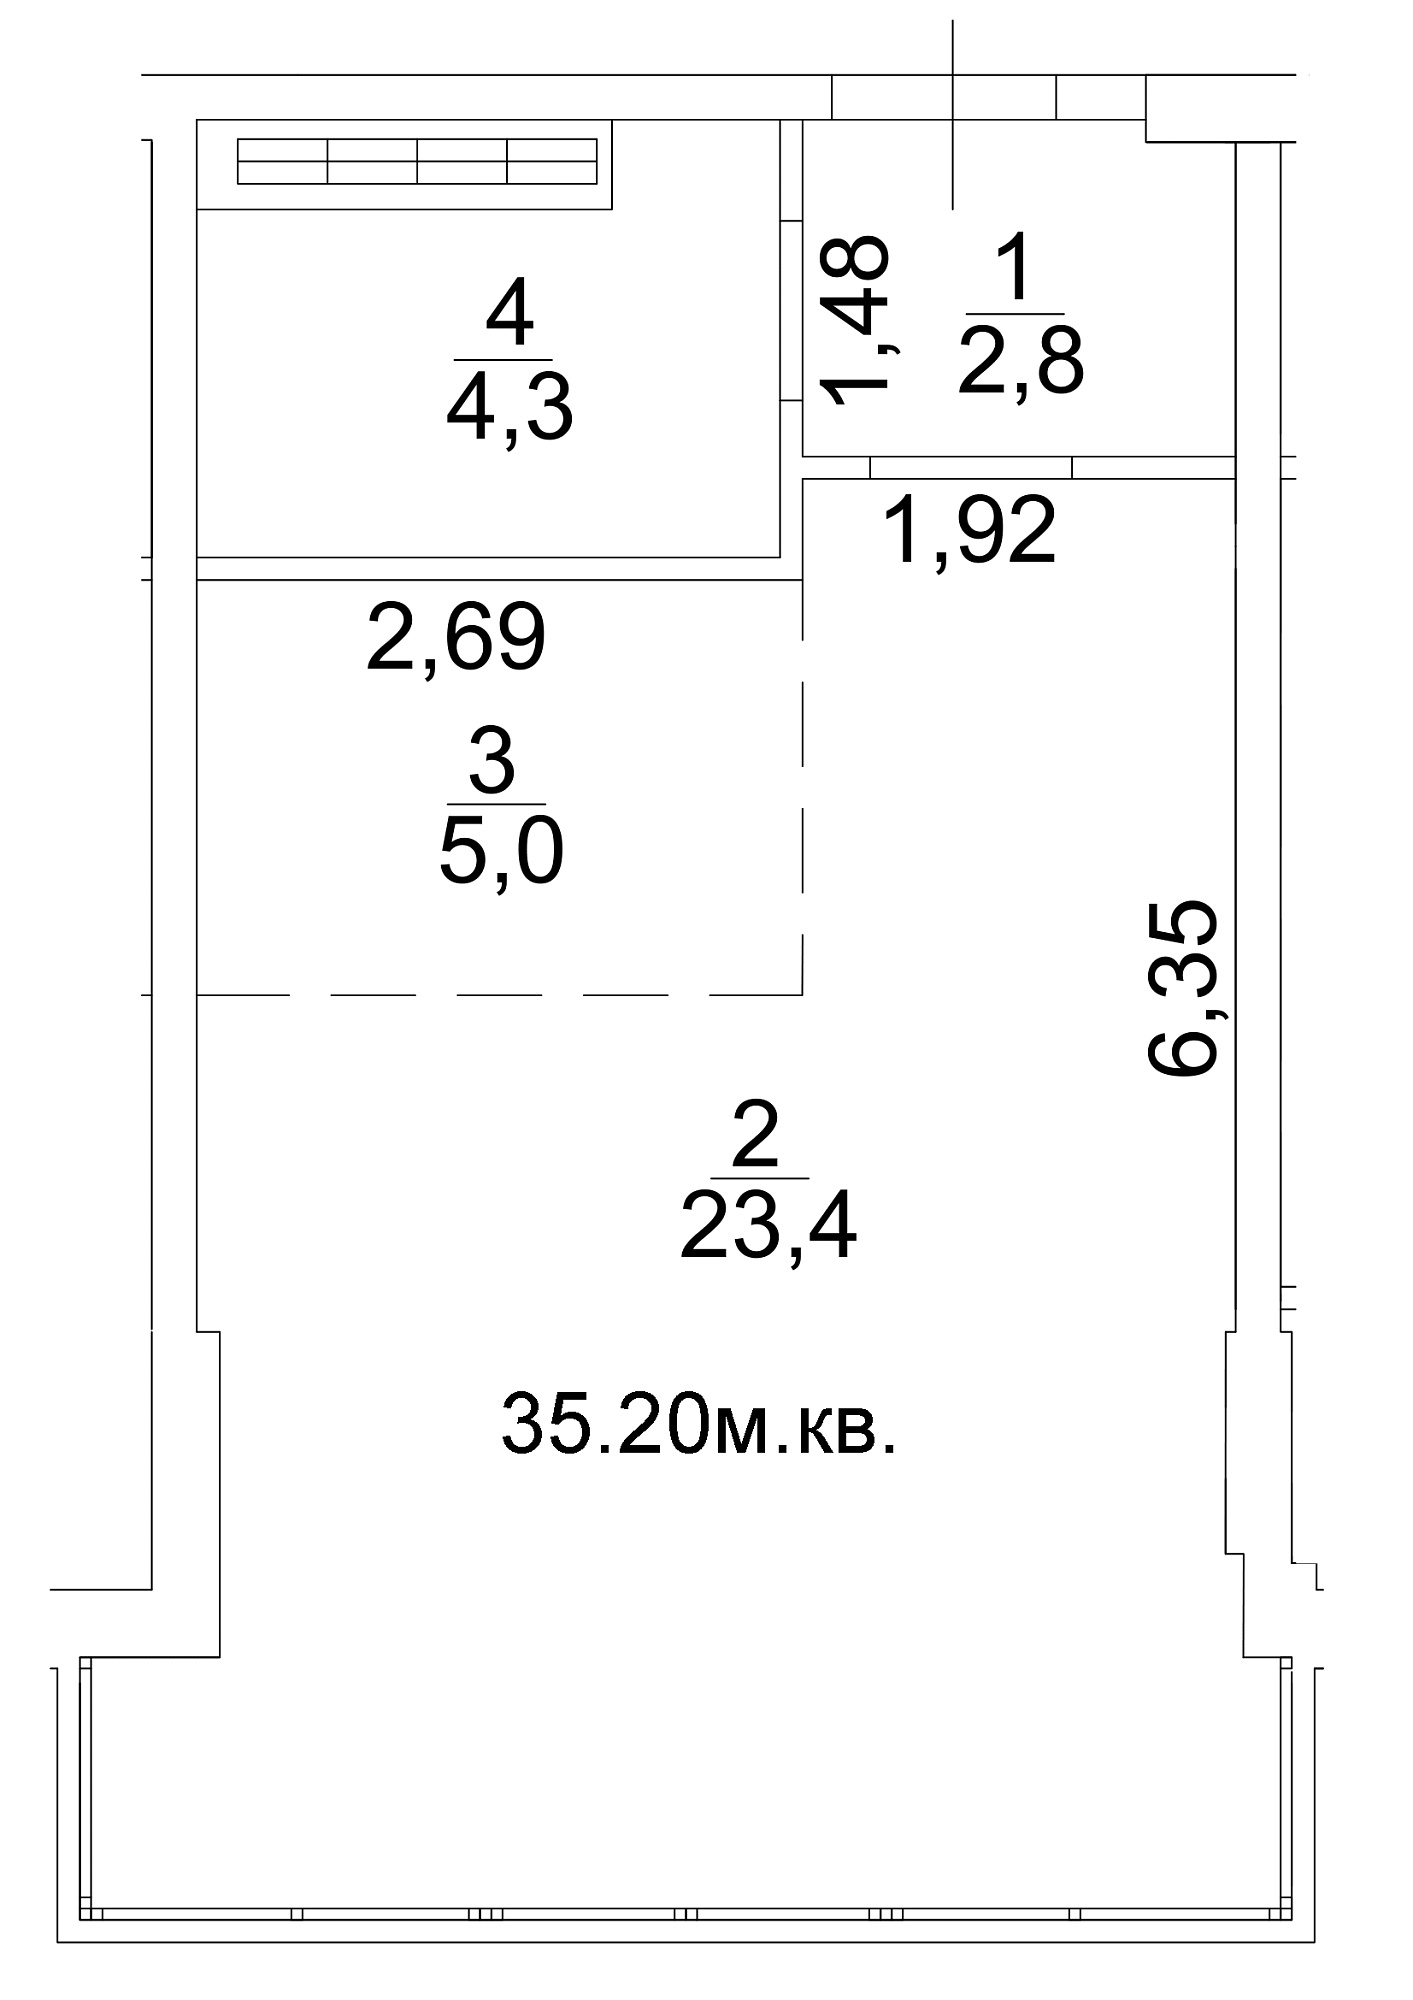 Planning Smart flats area 35.2m2, AB-13-09/0070б.